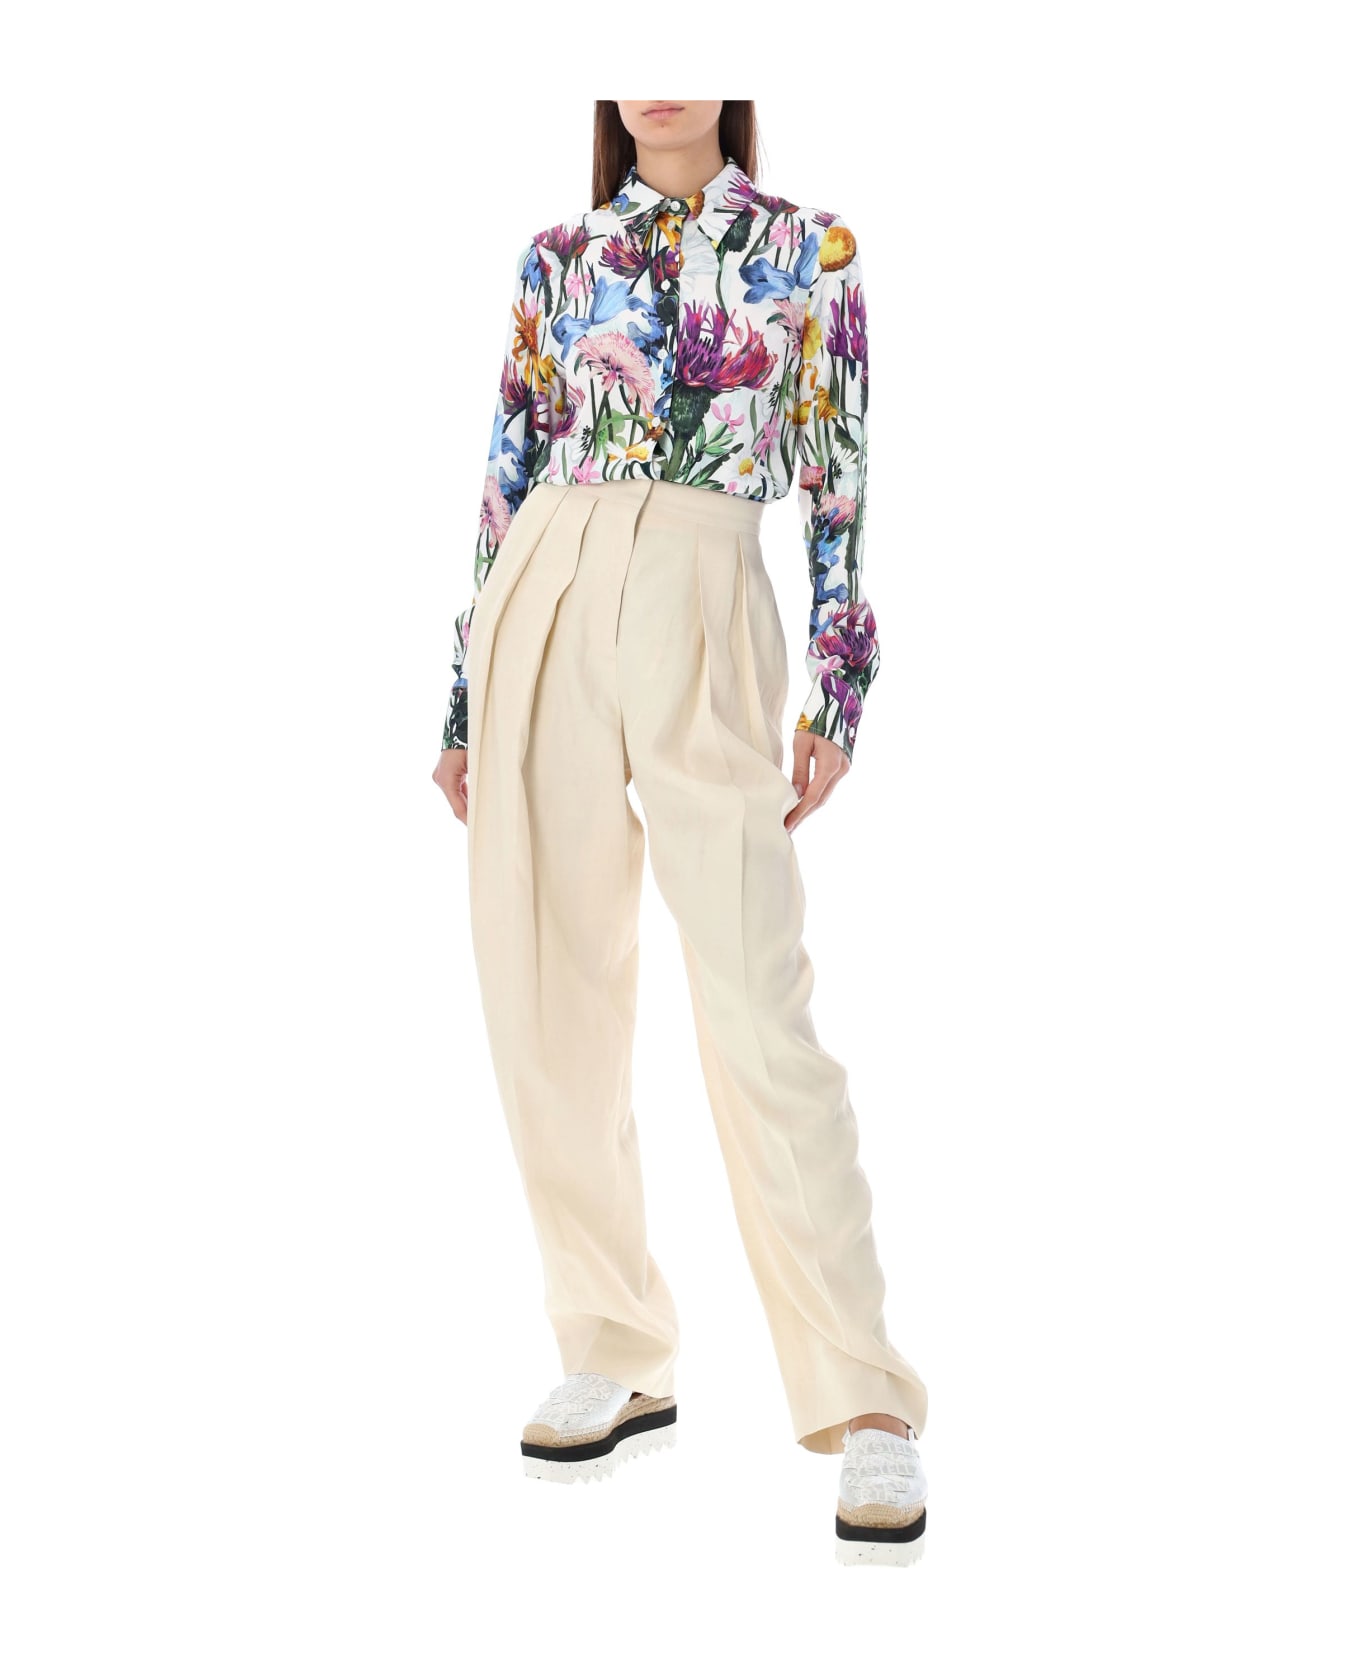 Stella McCartney Floral Shirt - MUTLI FLOWER